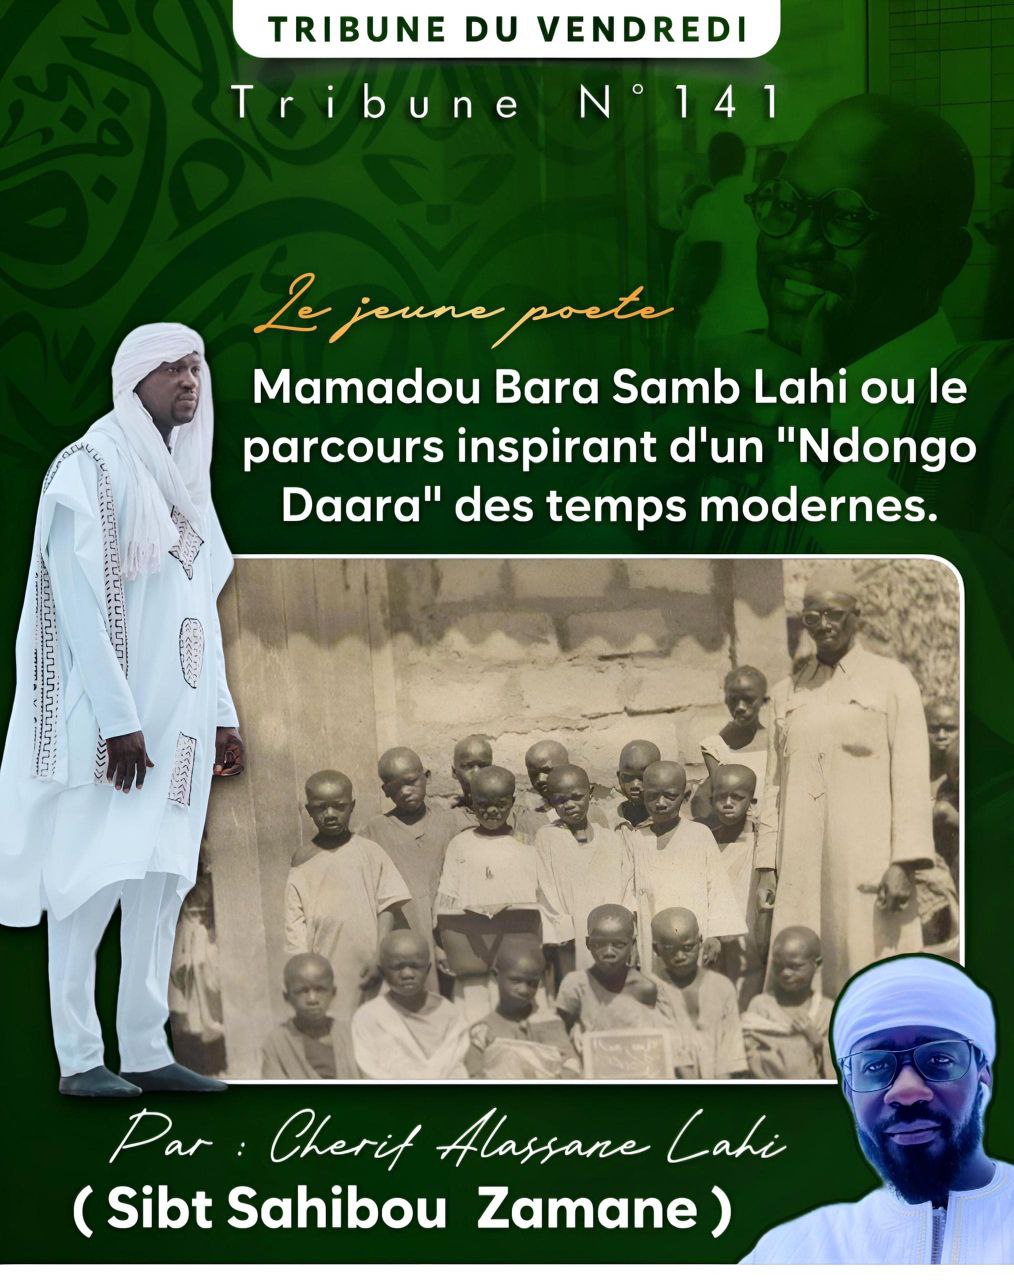 TRIBUNE DU VENDREDI N° 141 : Mamadou Bara Samb Lahi ou le parcours inspirant d’un « NDONGO DAARA » des temps modernes